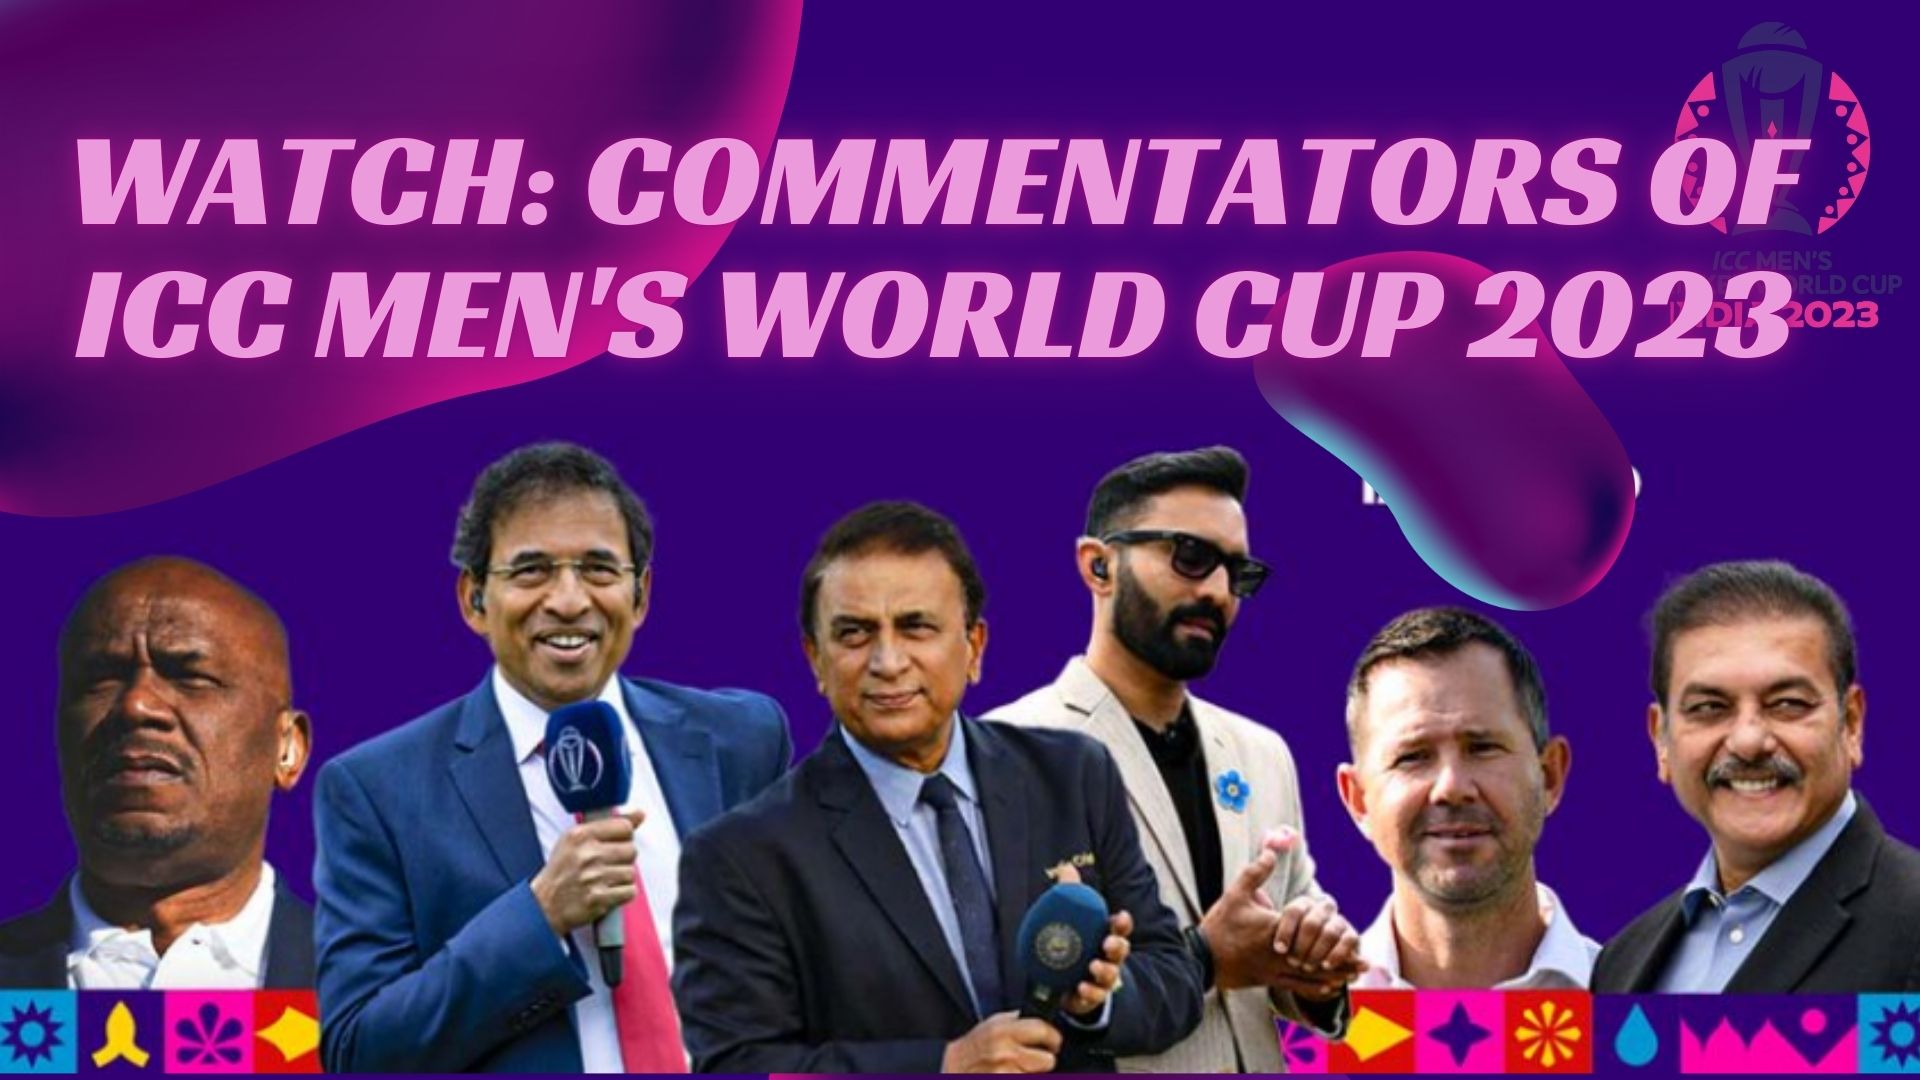 Watch: Commentators of ICC Men's World Cup 2023